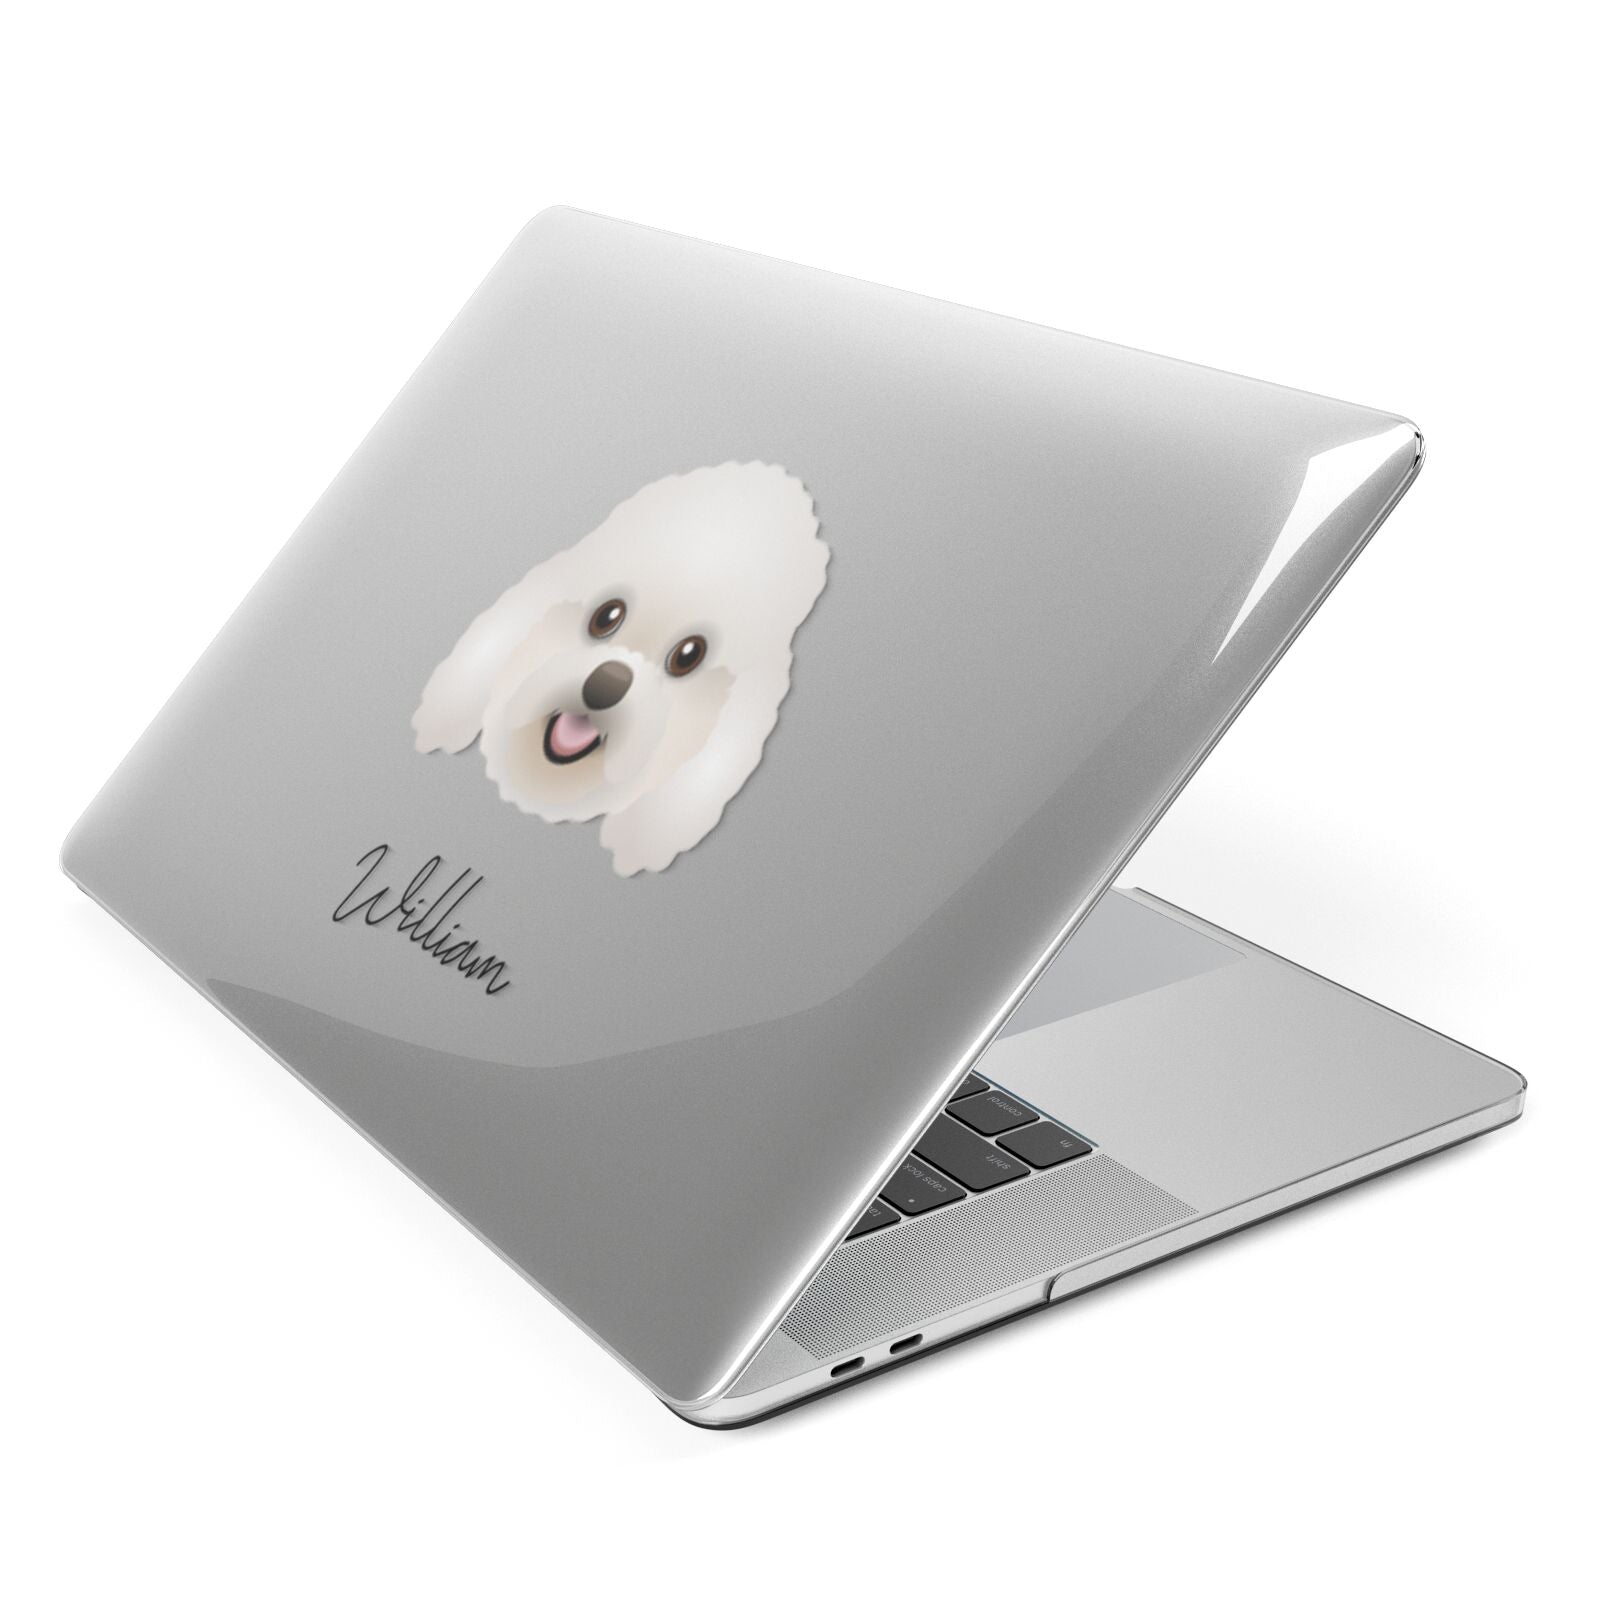 Bich poo Personalised Apple MacBook Case Side View